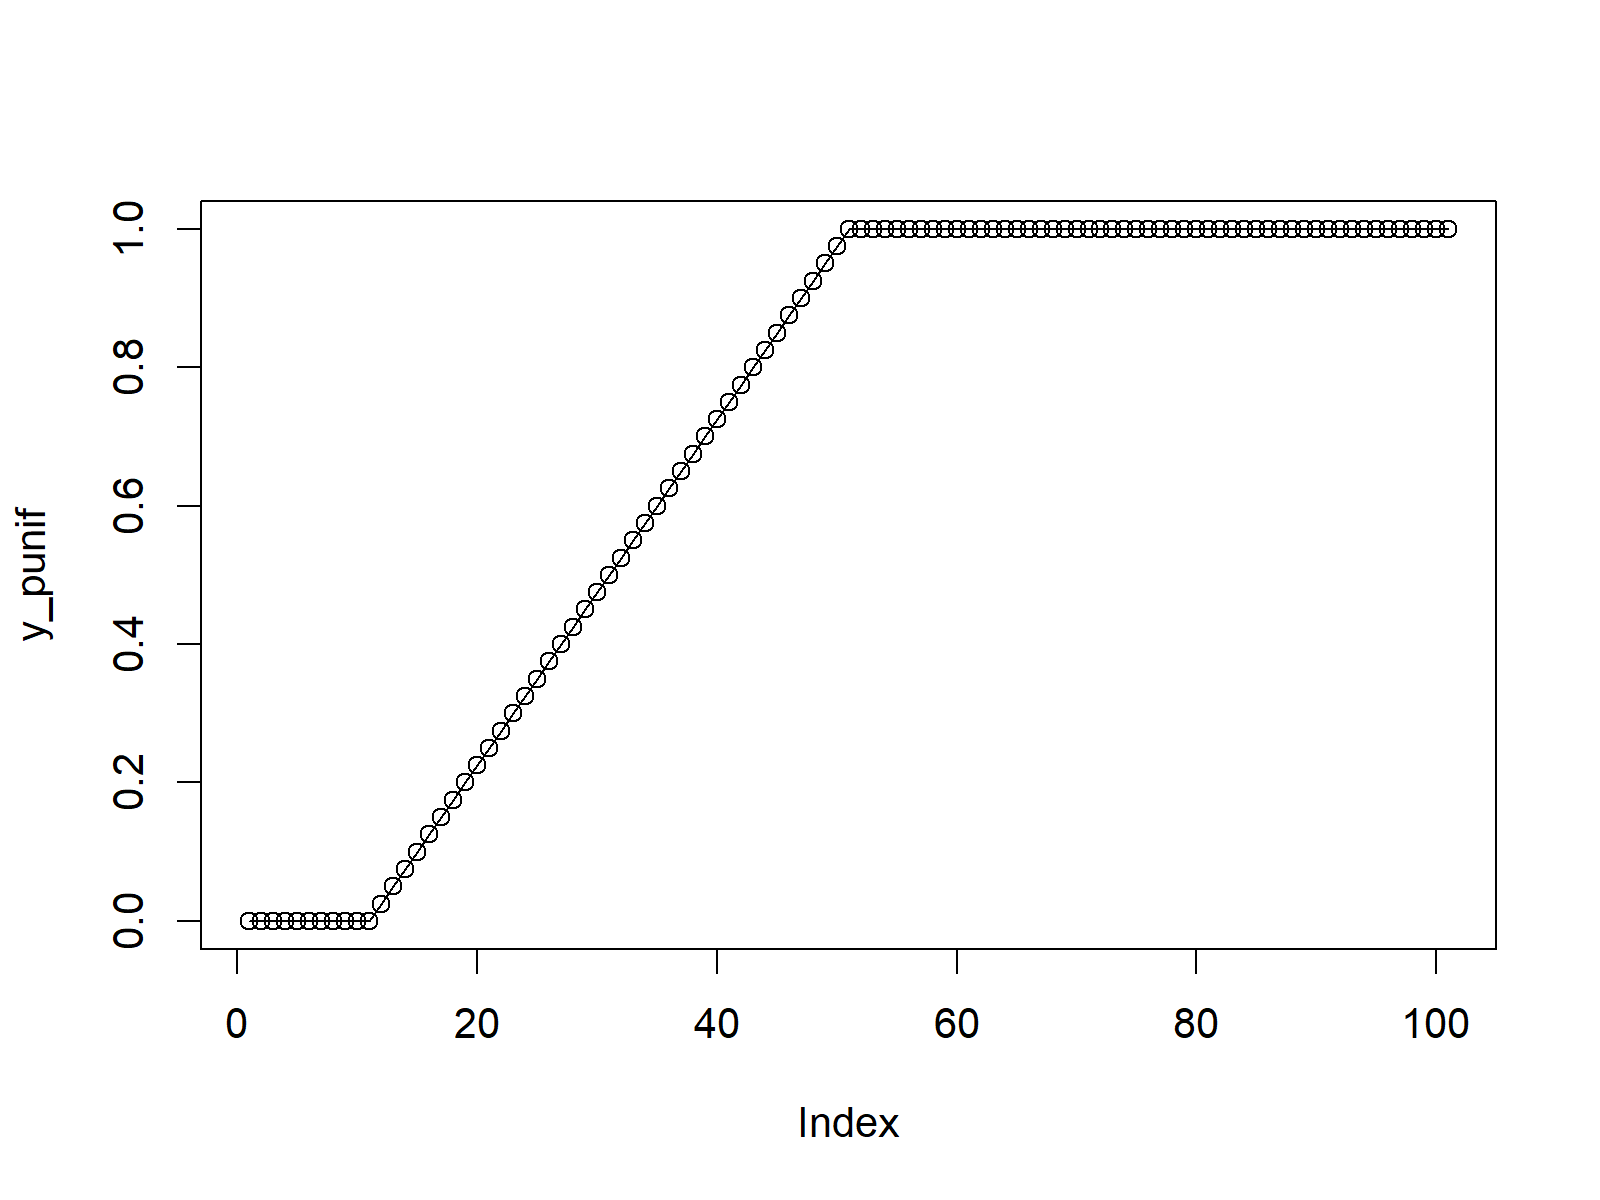 uniform cumulative distribution function (PDF) in the R programming language